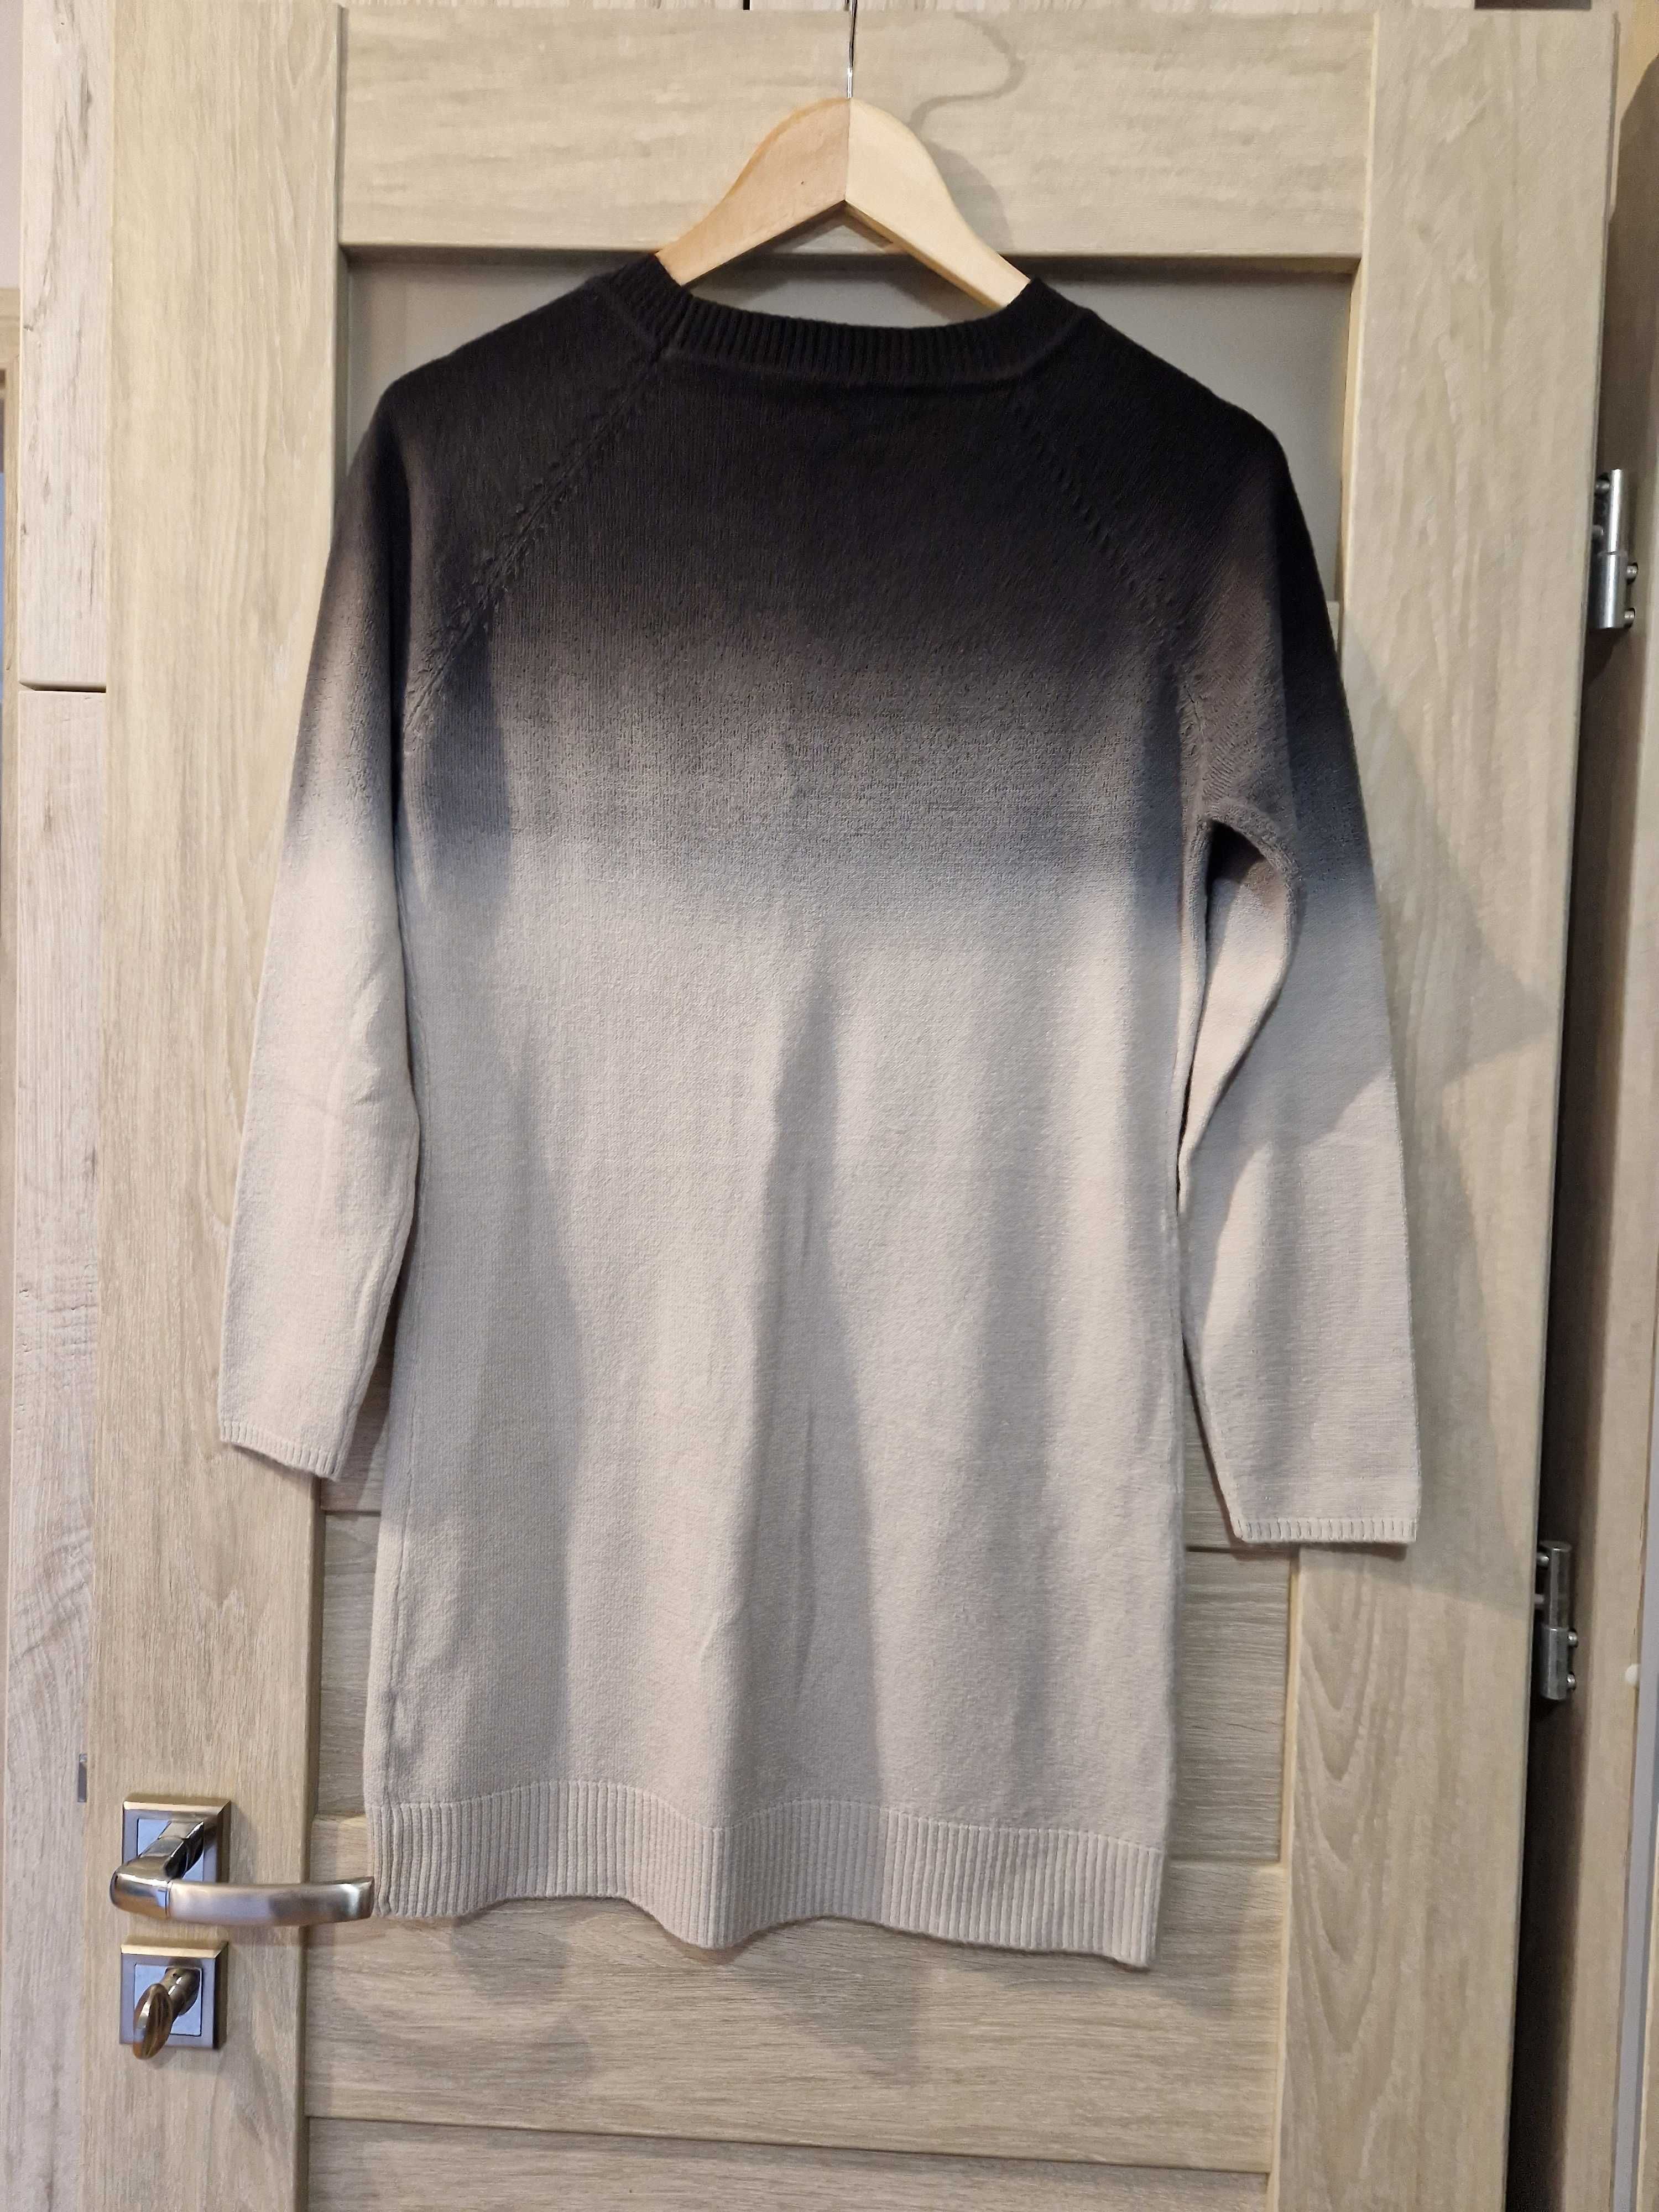 Sukienka tunika sweterkowa ombre cieniowana cekiny rozmiar M/L